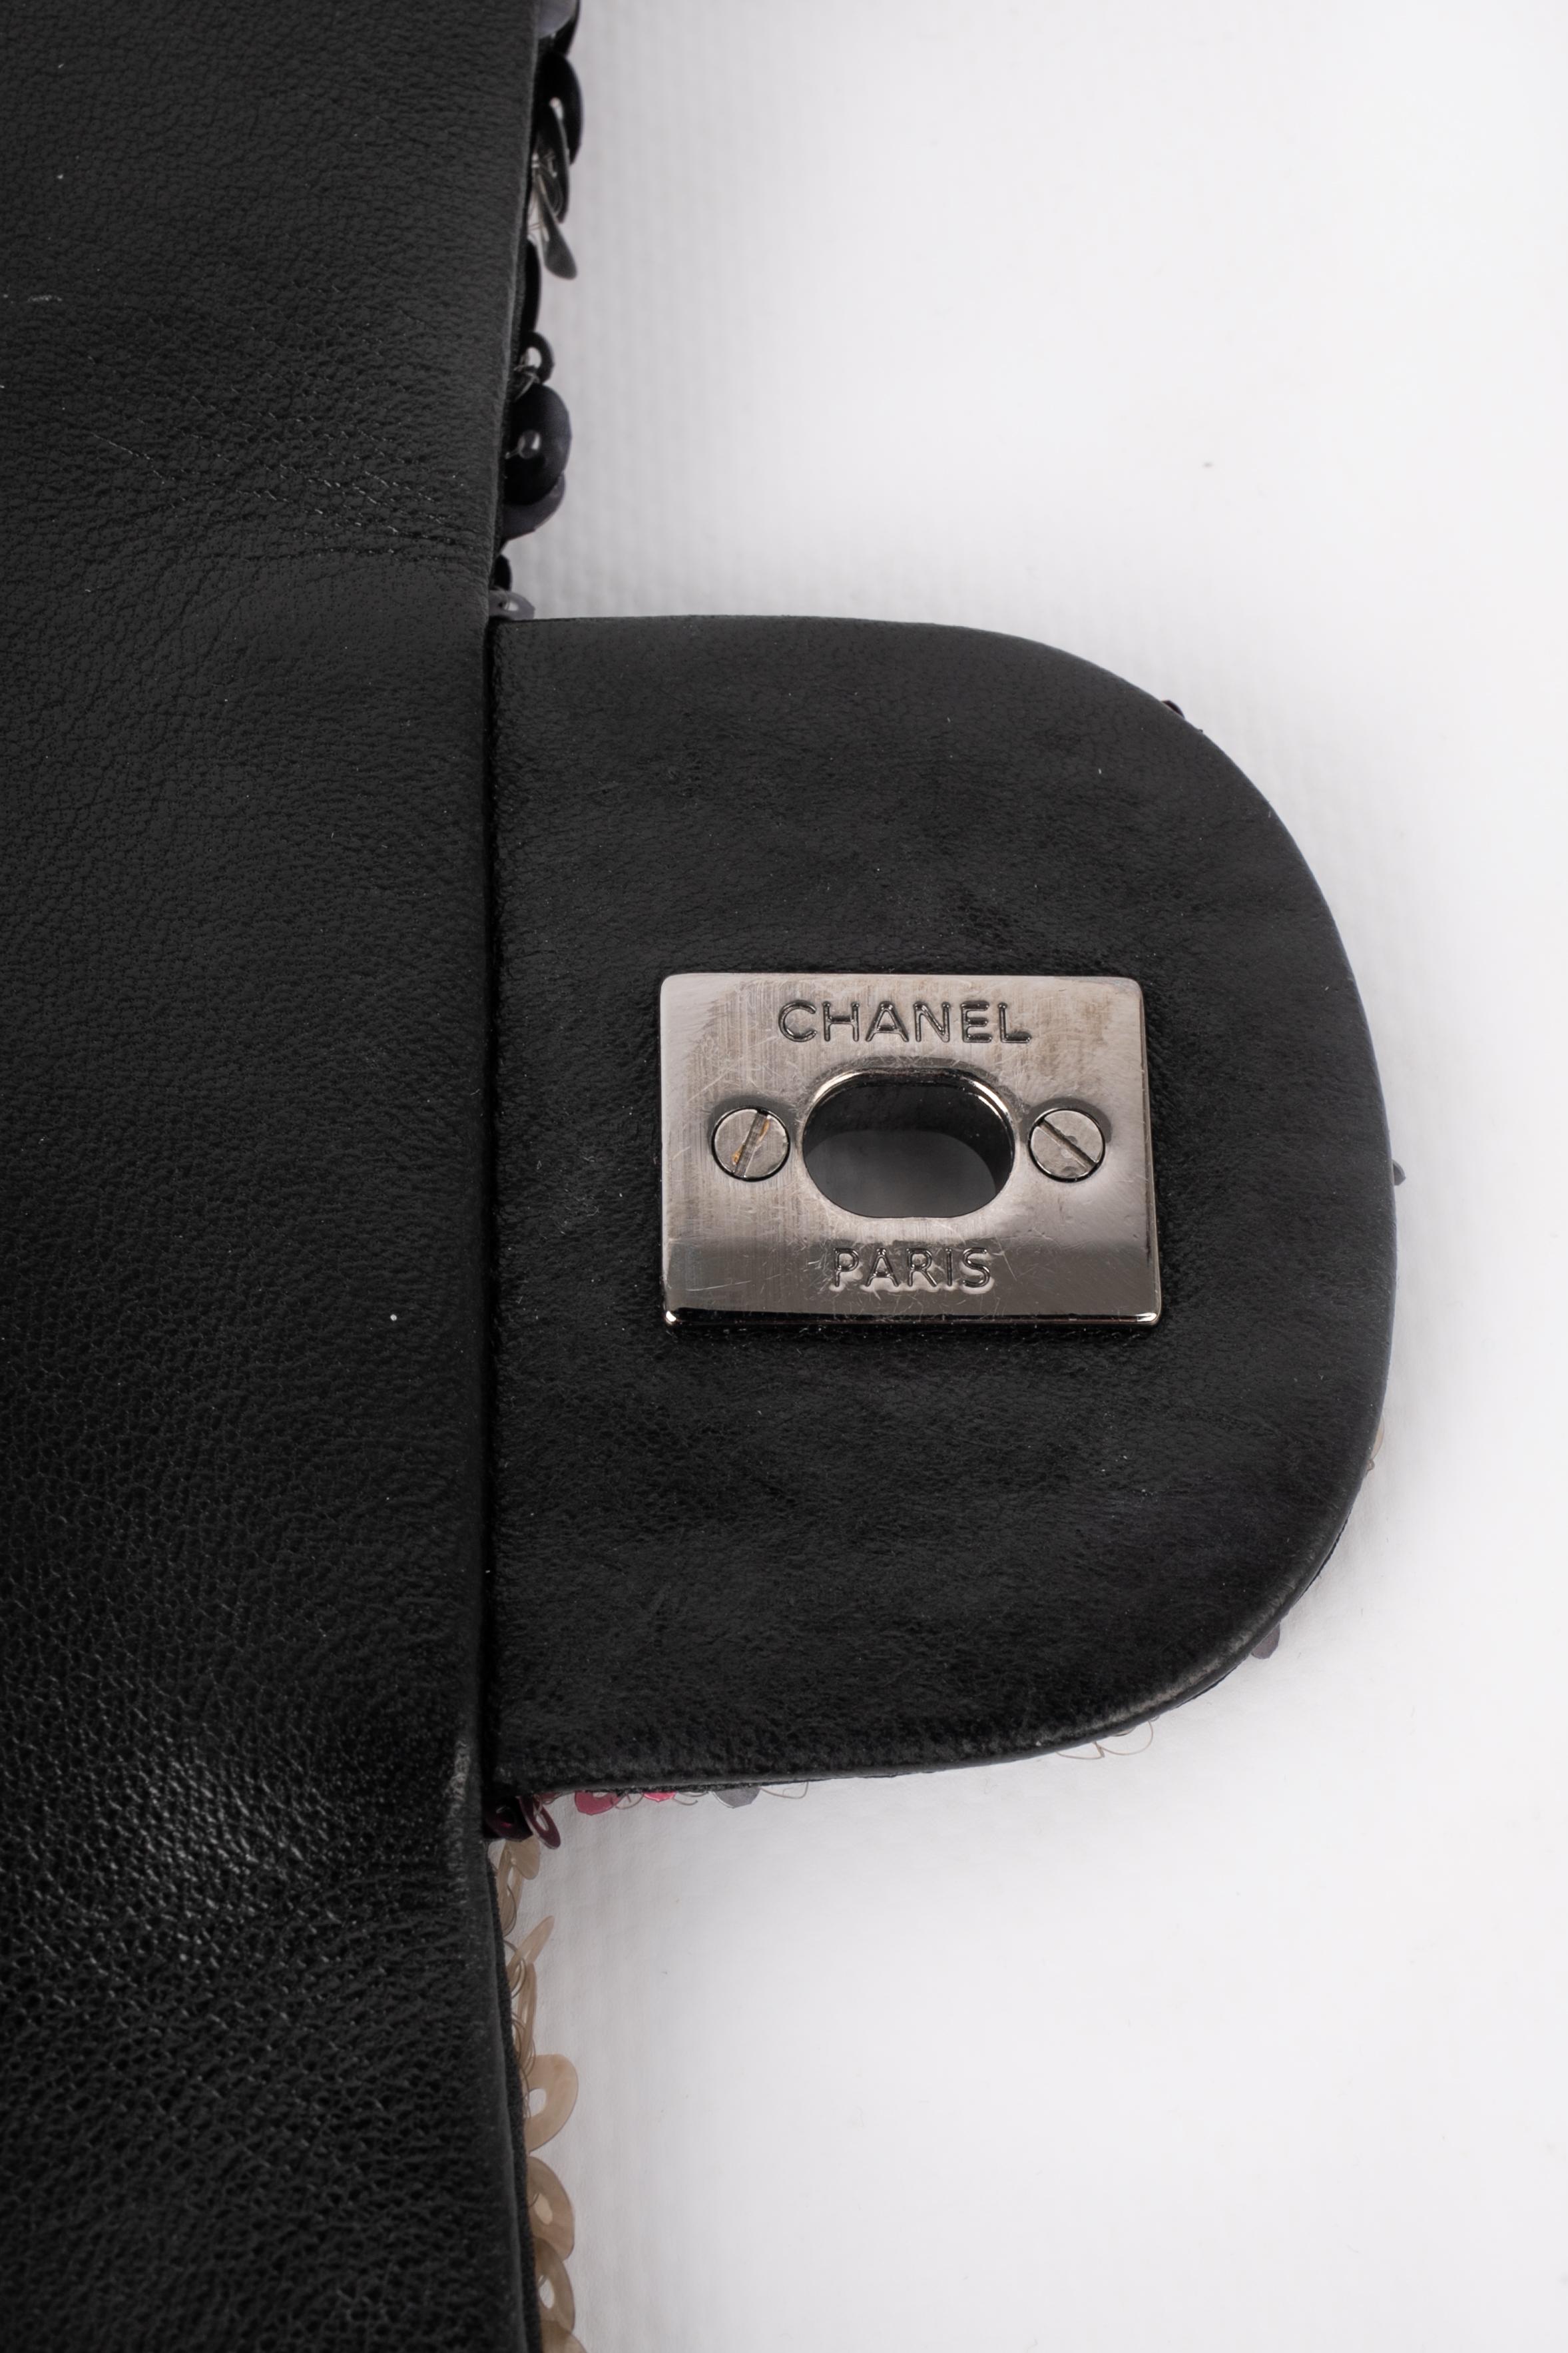 Chanel classic bag 2012/2013 6